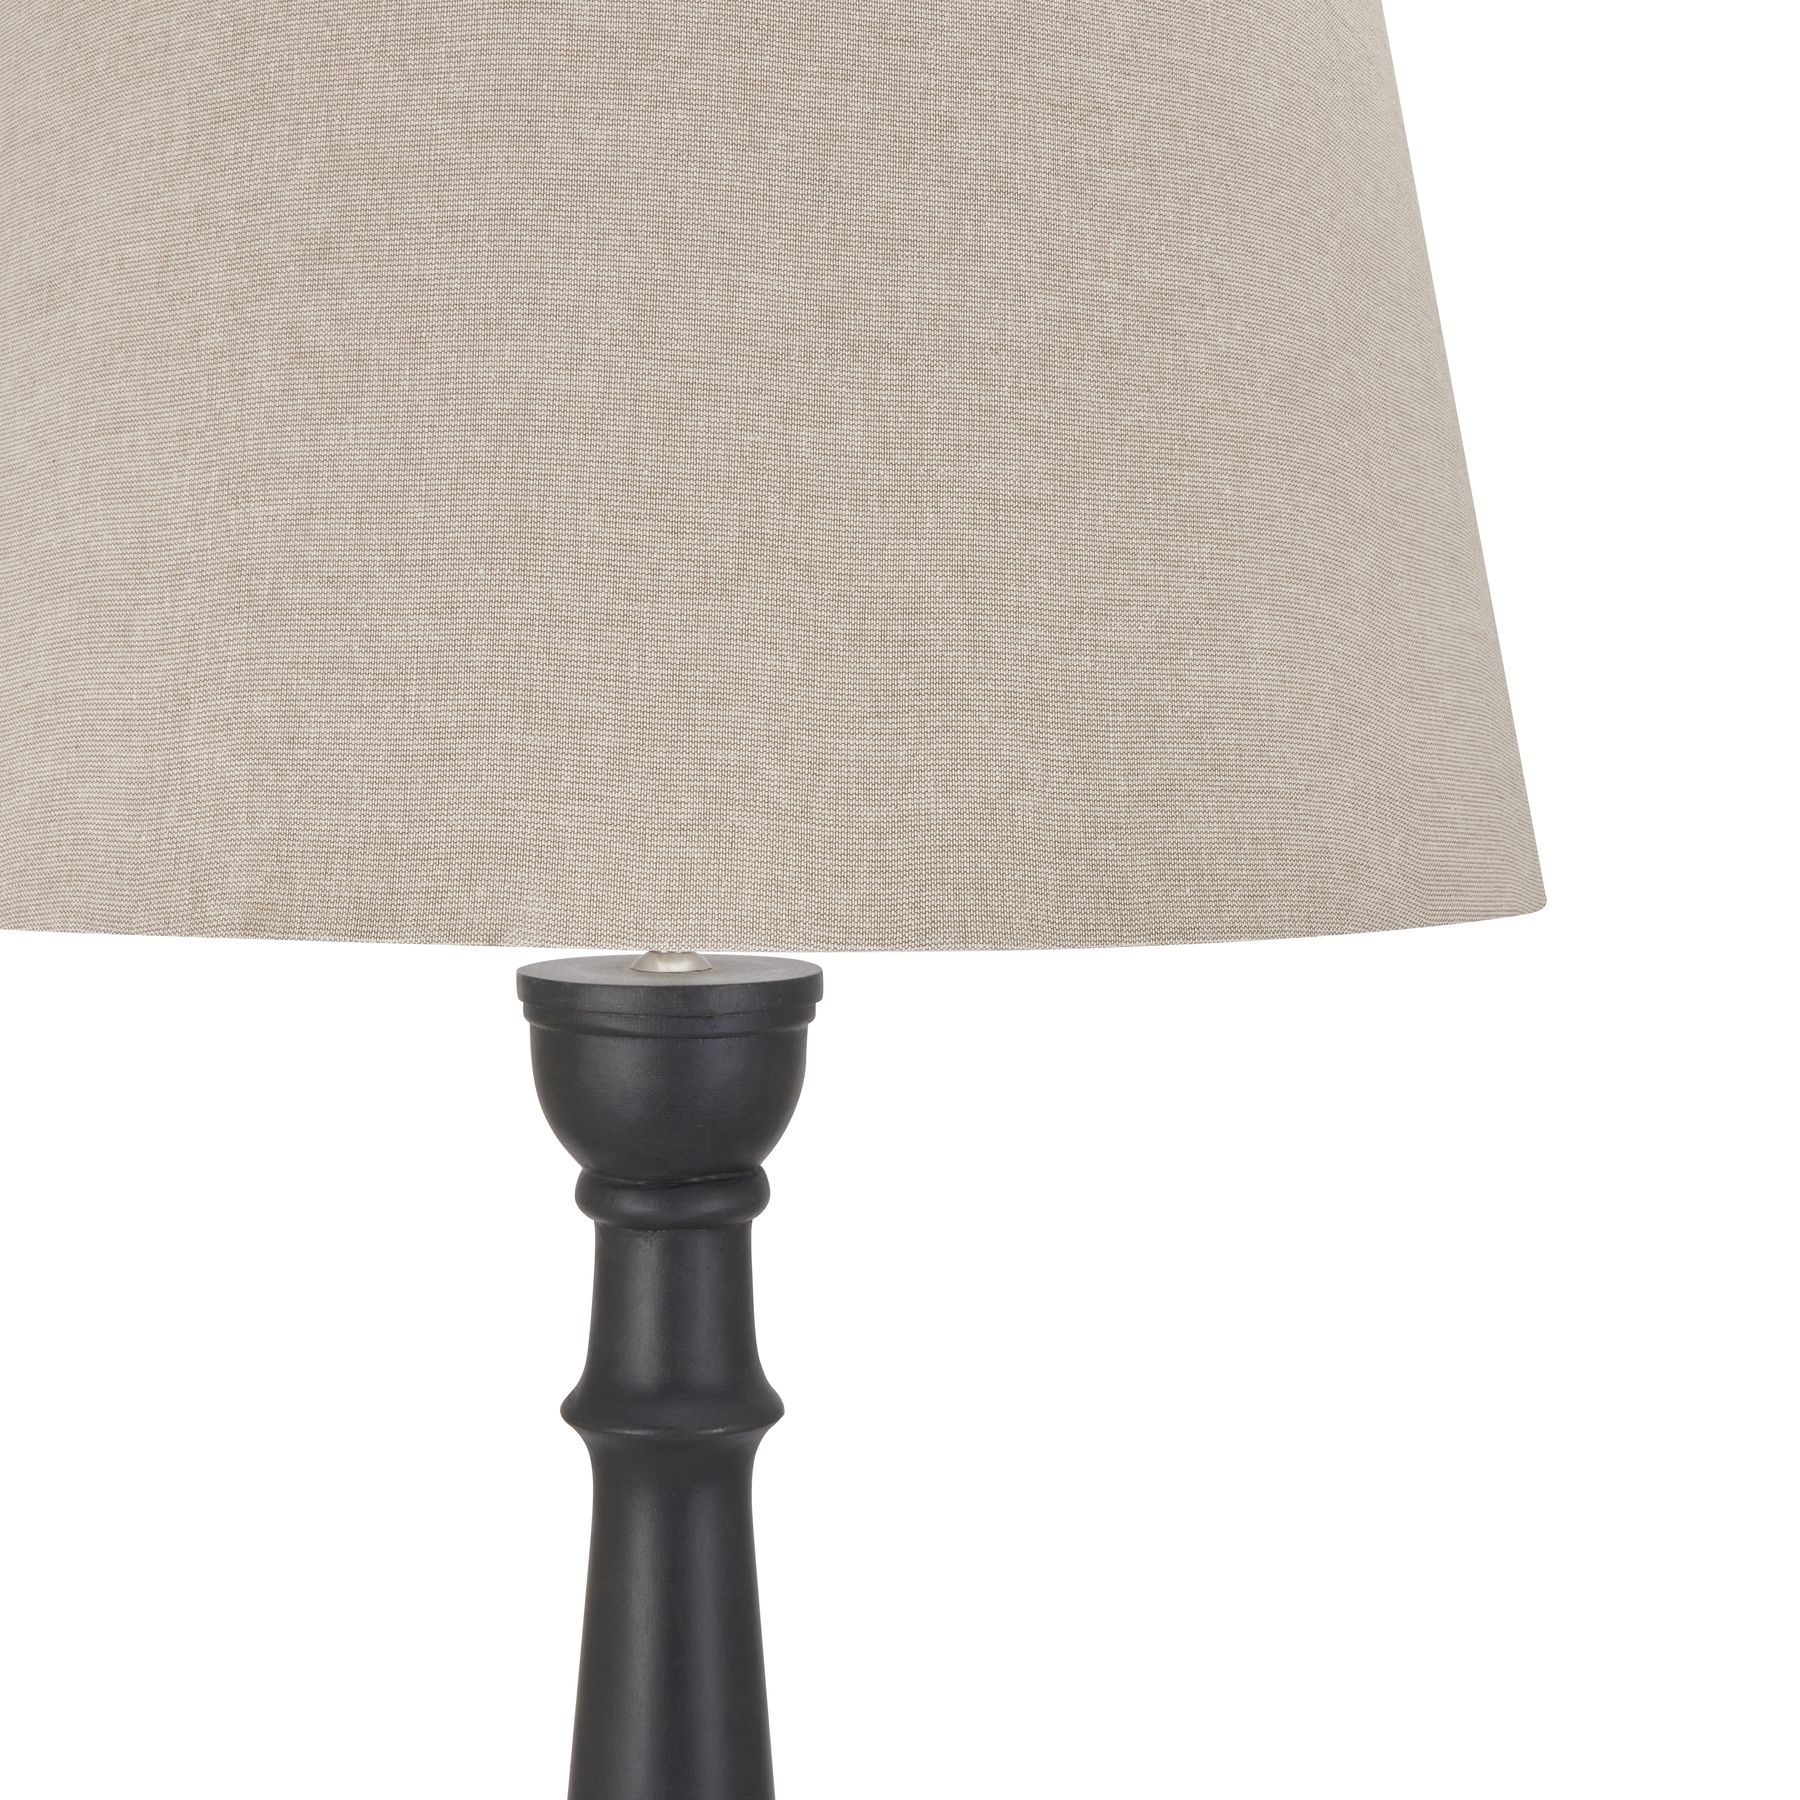 Delaney Grey Droplet Floor Lamp With Linen Shade - Image 2